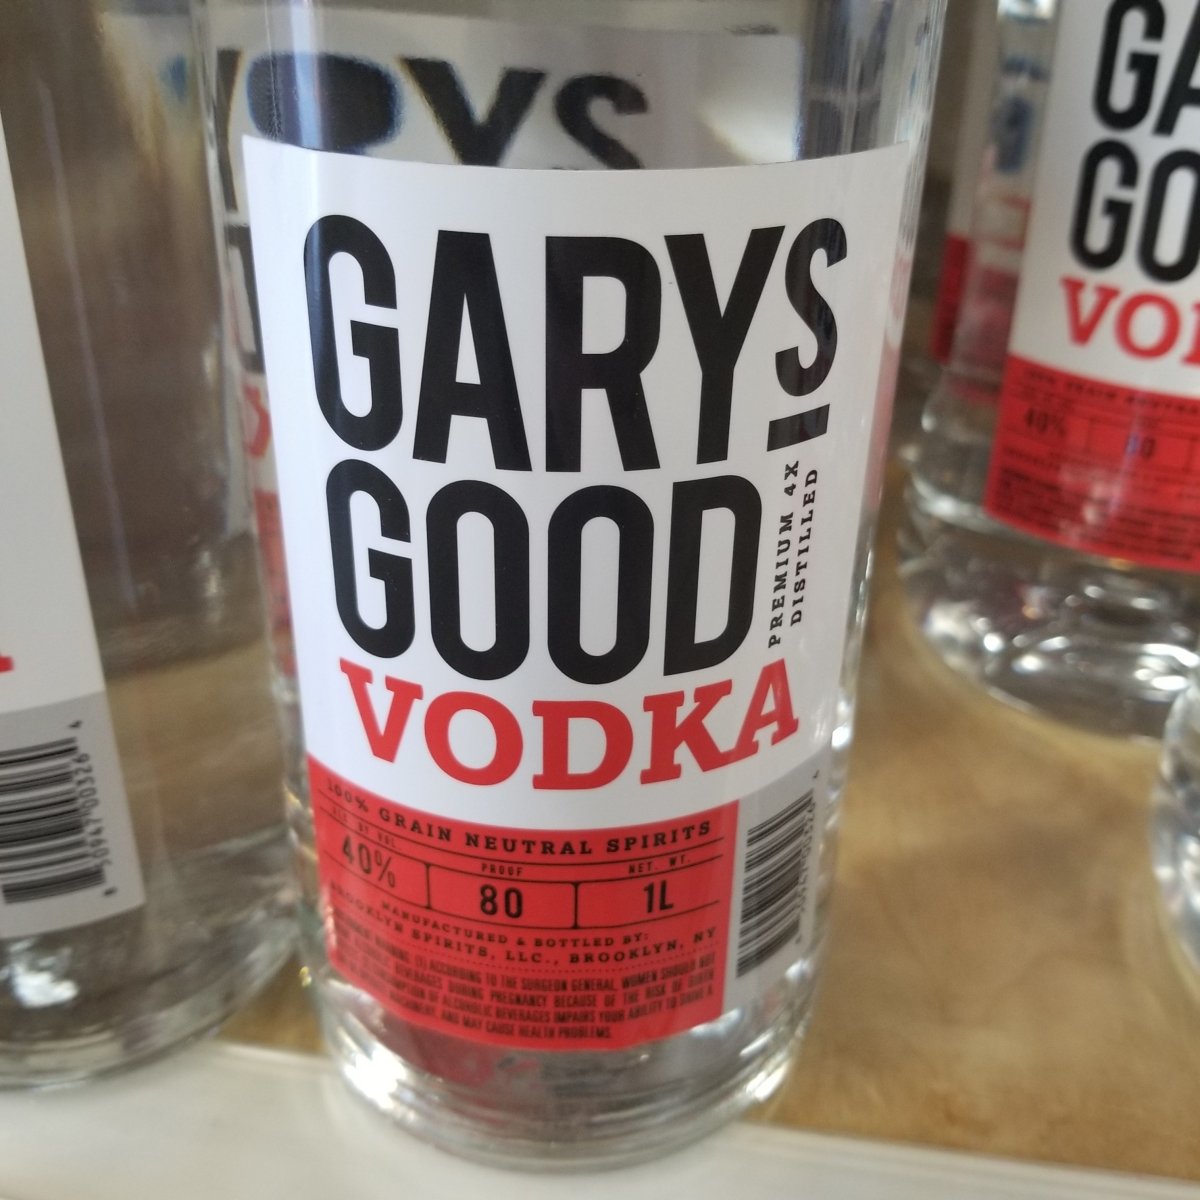 Garys Good Vodka 1.75L (Gluten Free) - Sip & Say